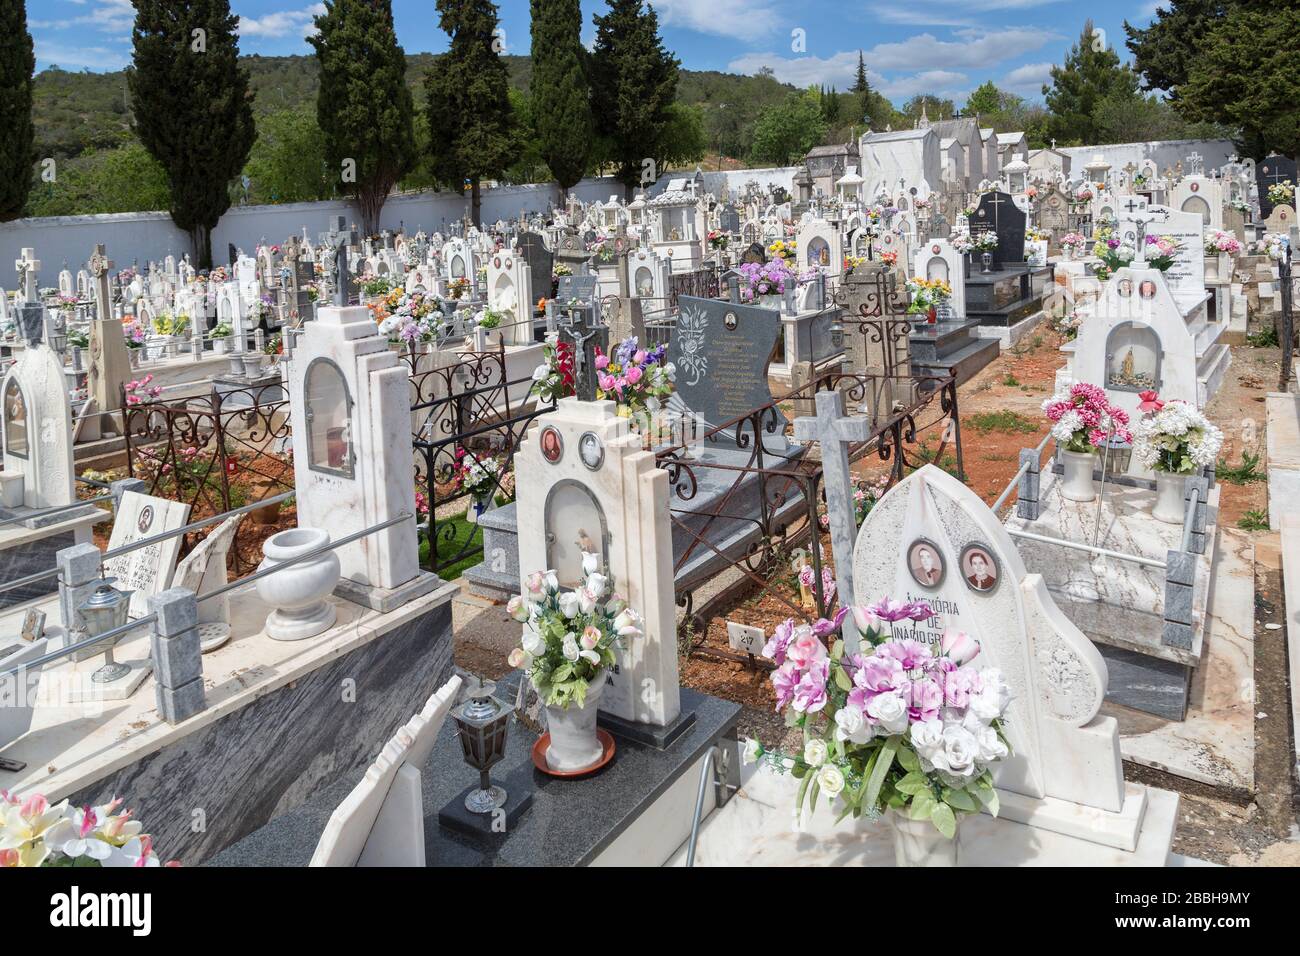 Cemetery, Alte, Algarve, Portugal Stock Photo